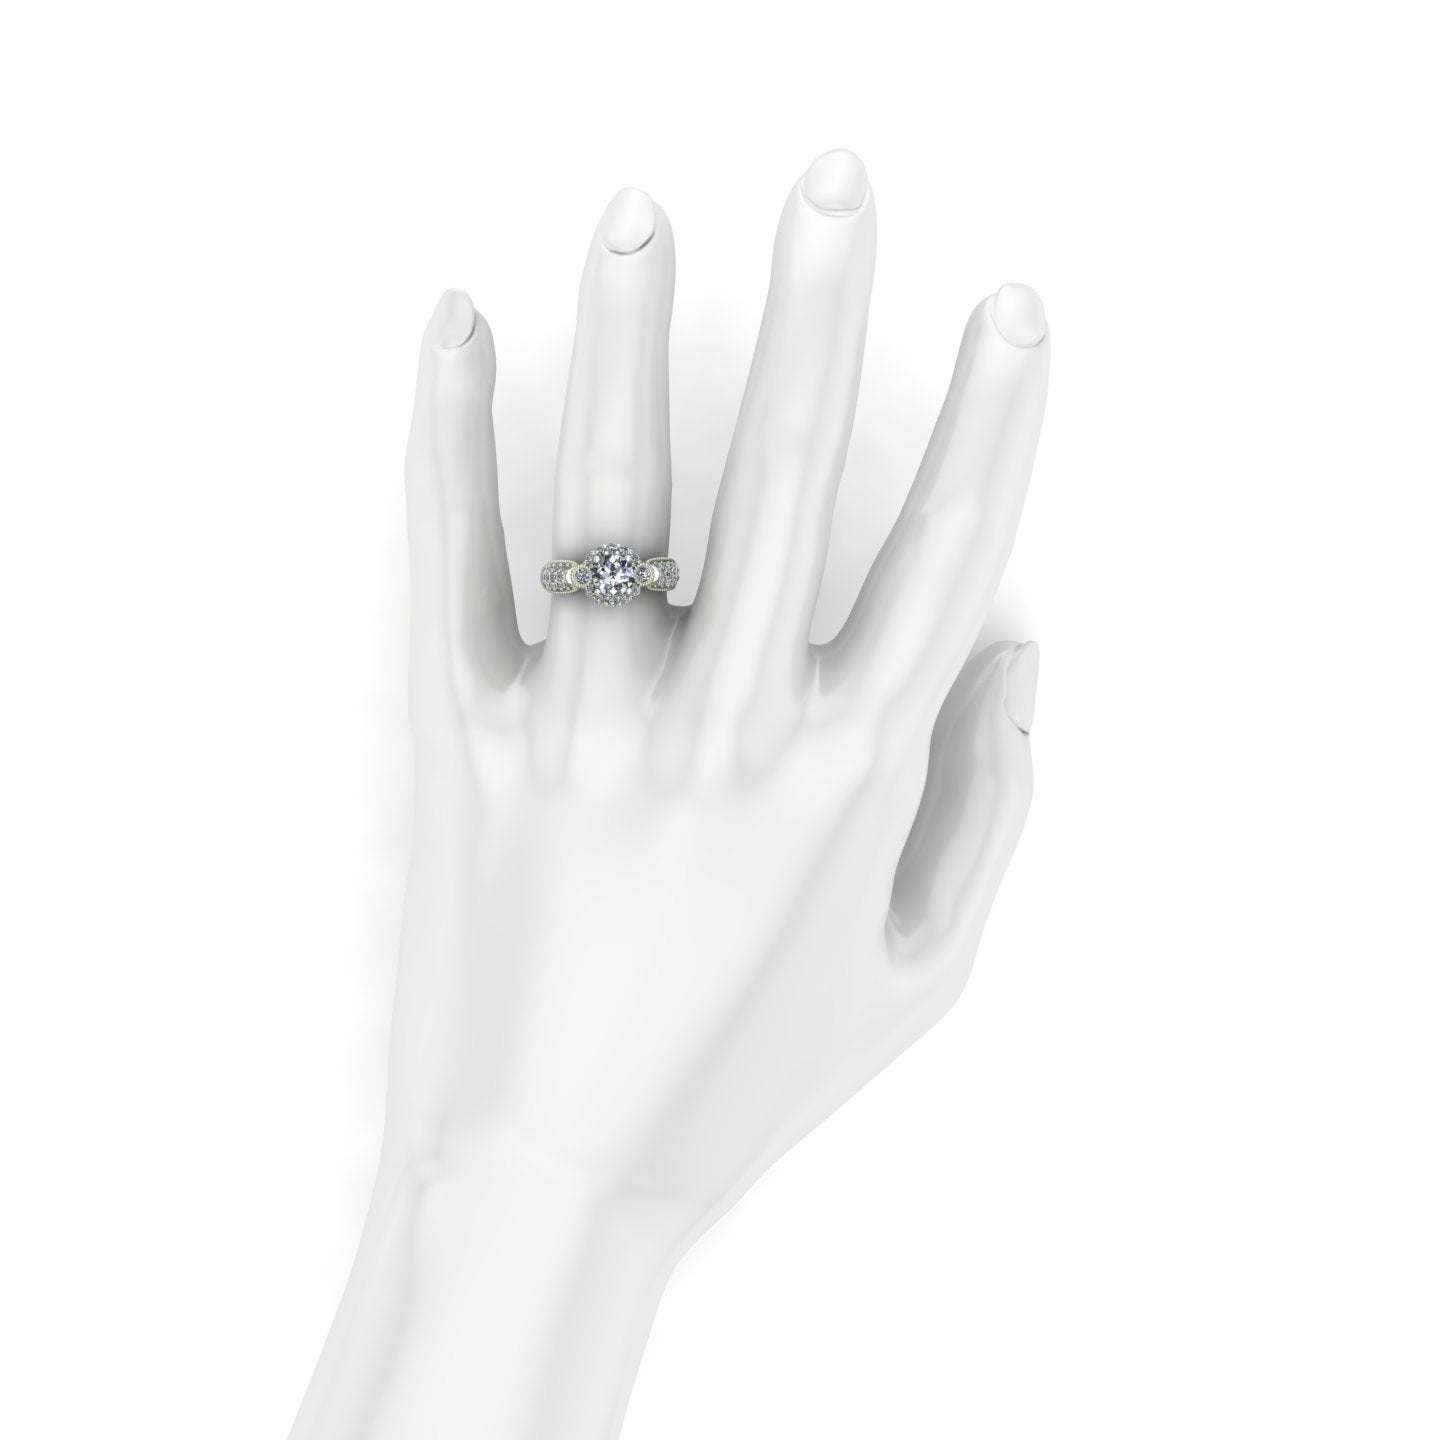 1ct diamond pavé engagement ring in 18k white gold - Charles Babb Designs - on hand